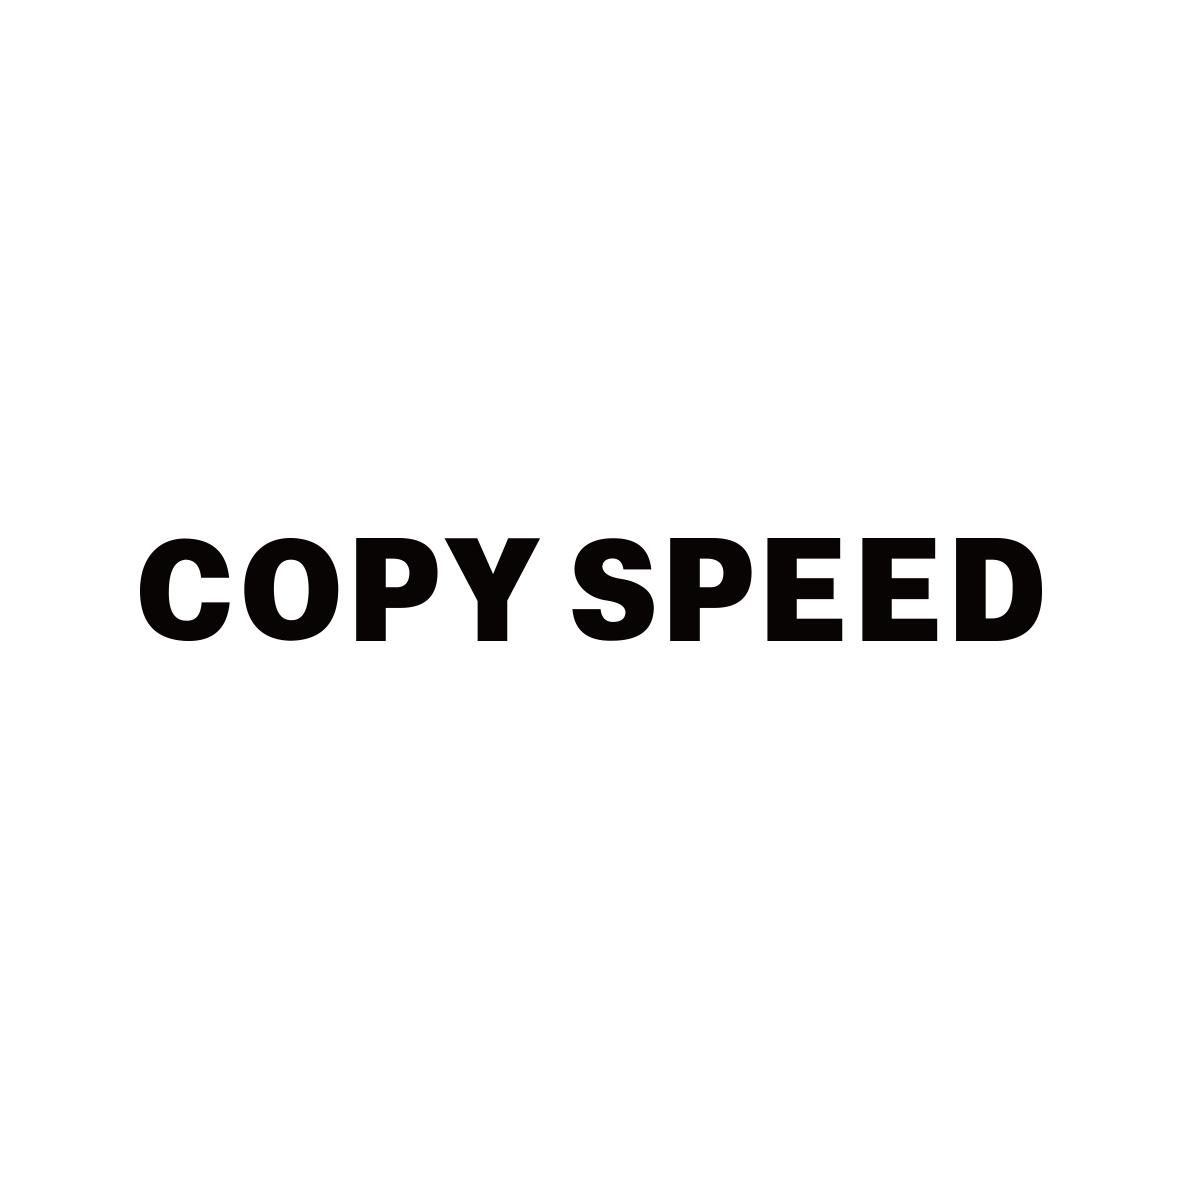 COPY SPEED印刷纸商标转让费用买卖交易流程